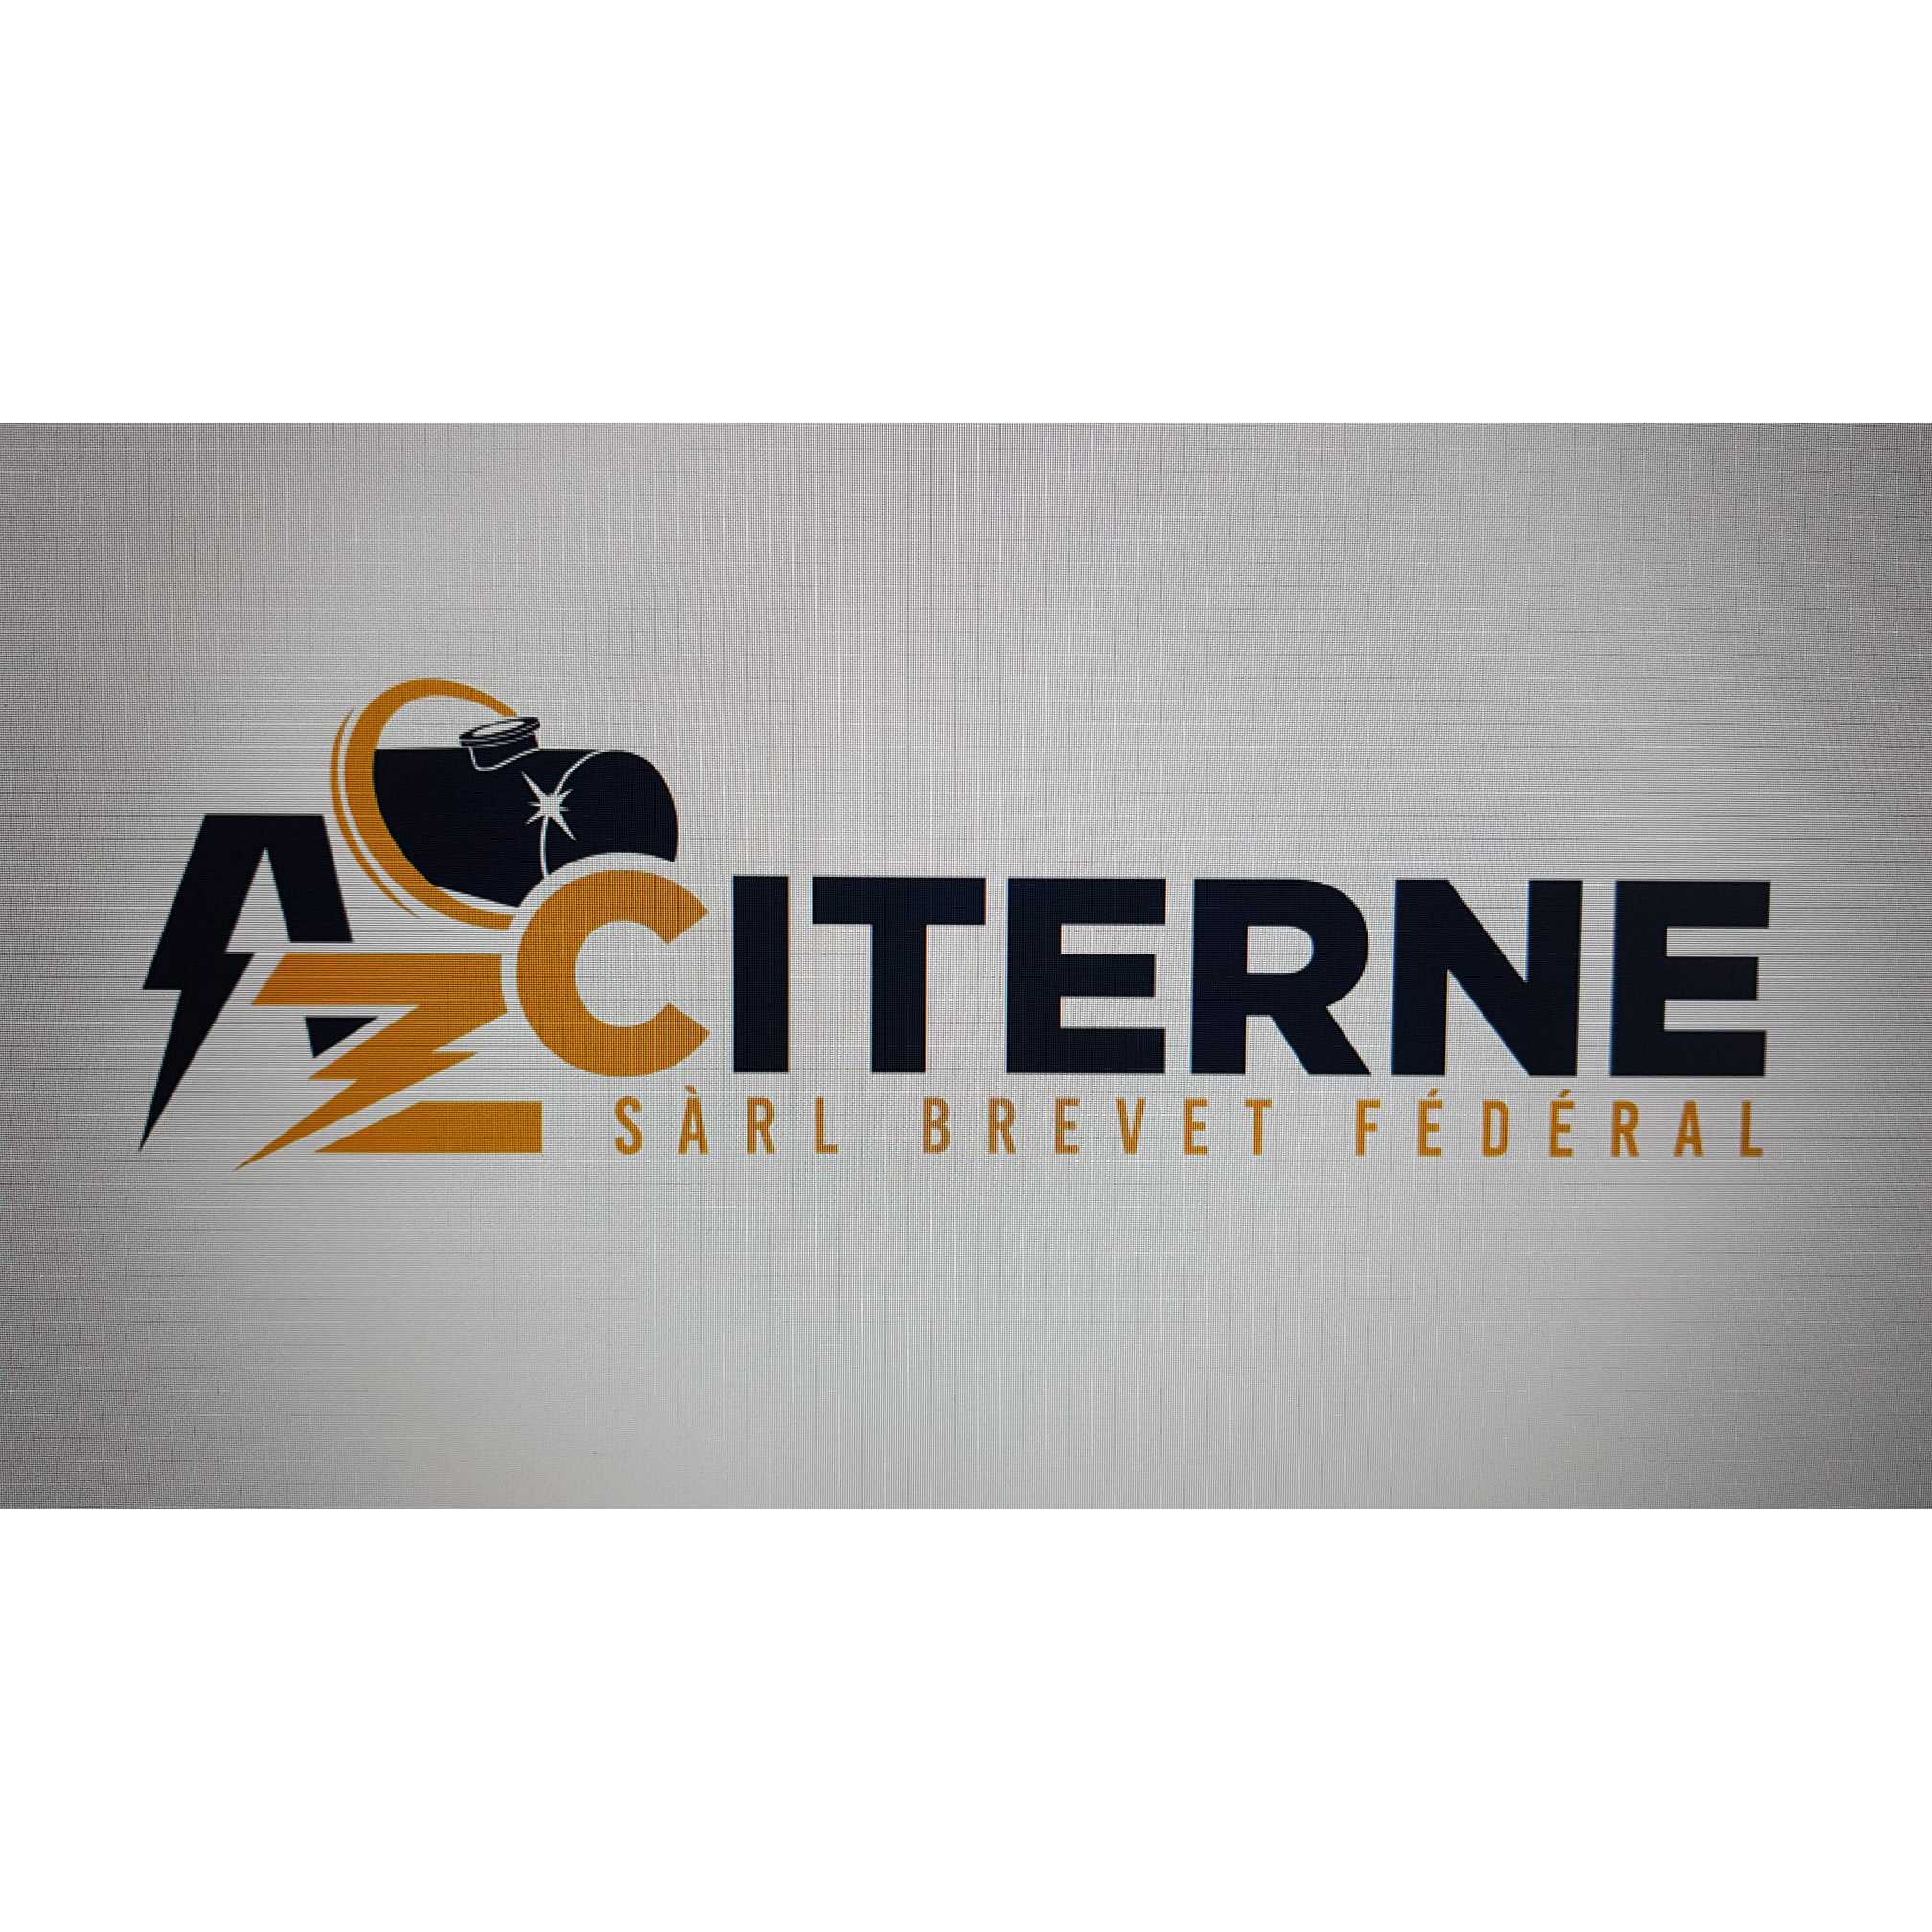 A-Z Citerne Logo